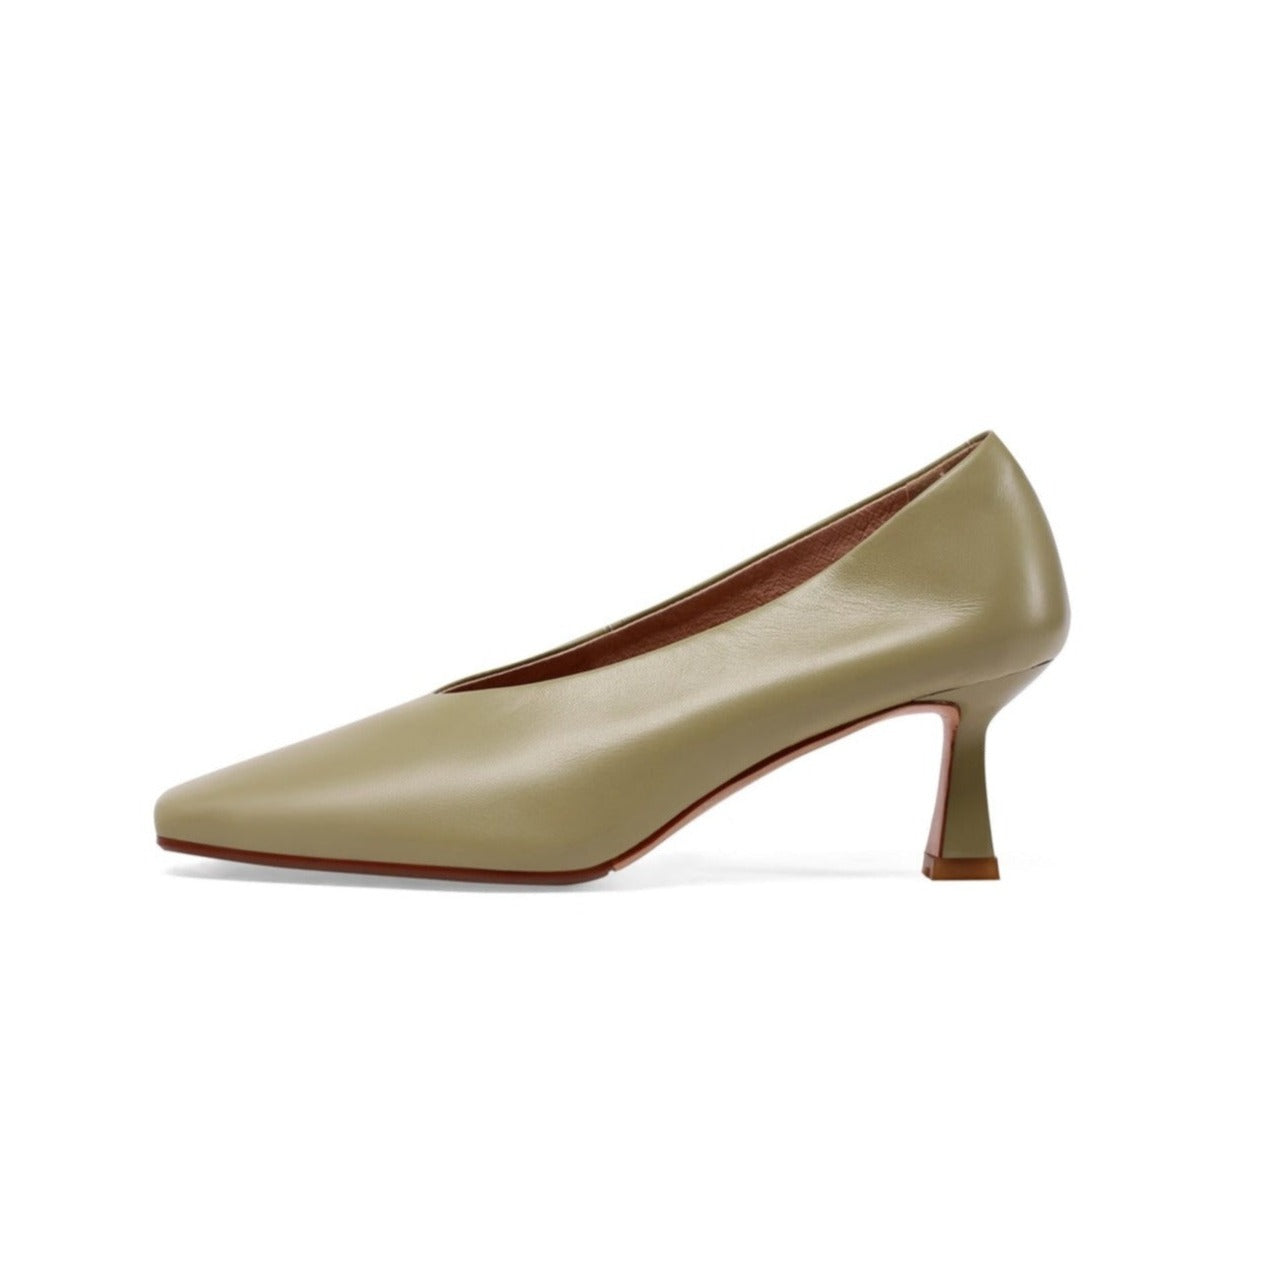 TinaCus Women's Handmade Genuine Leather Square Toe Stiletto Mid Heels Slip On Stylish Pumps Shoes